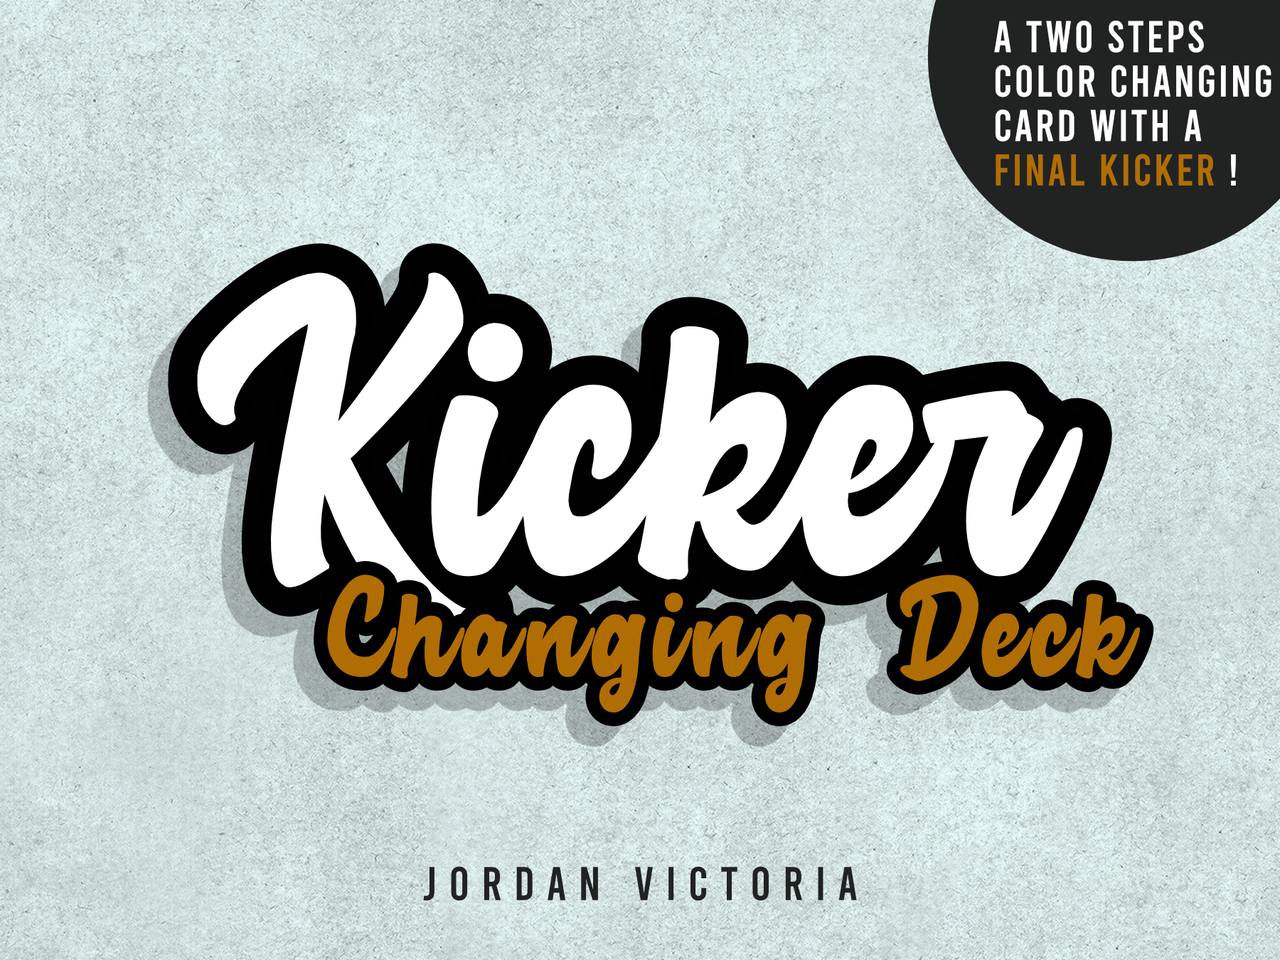 Kicker Changing Deck by Jordan Victoria (Mp4 Video Download 720p High Quality)